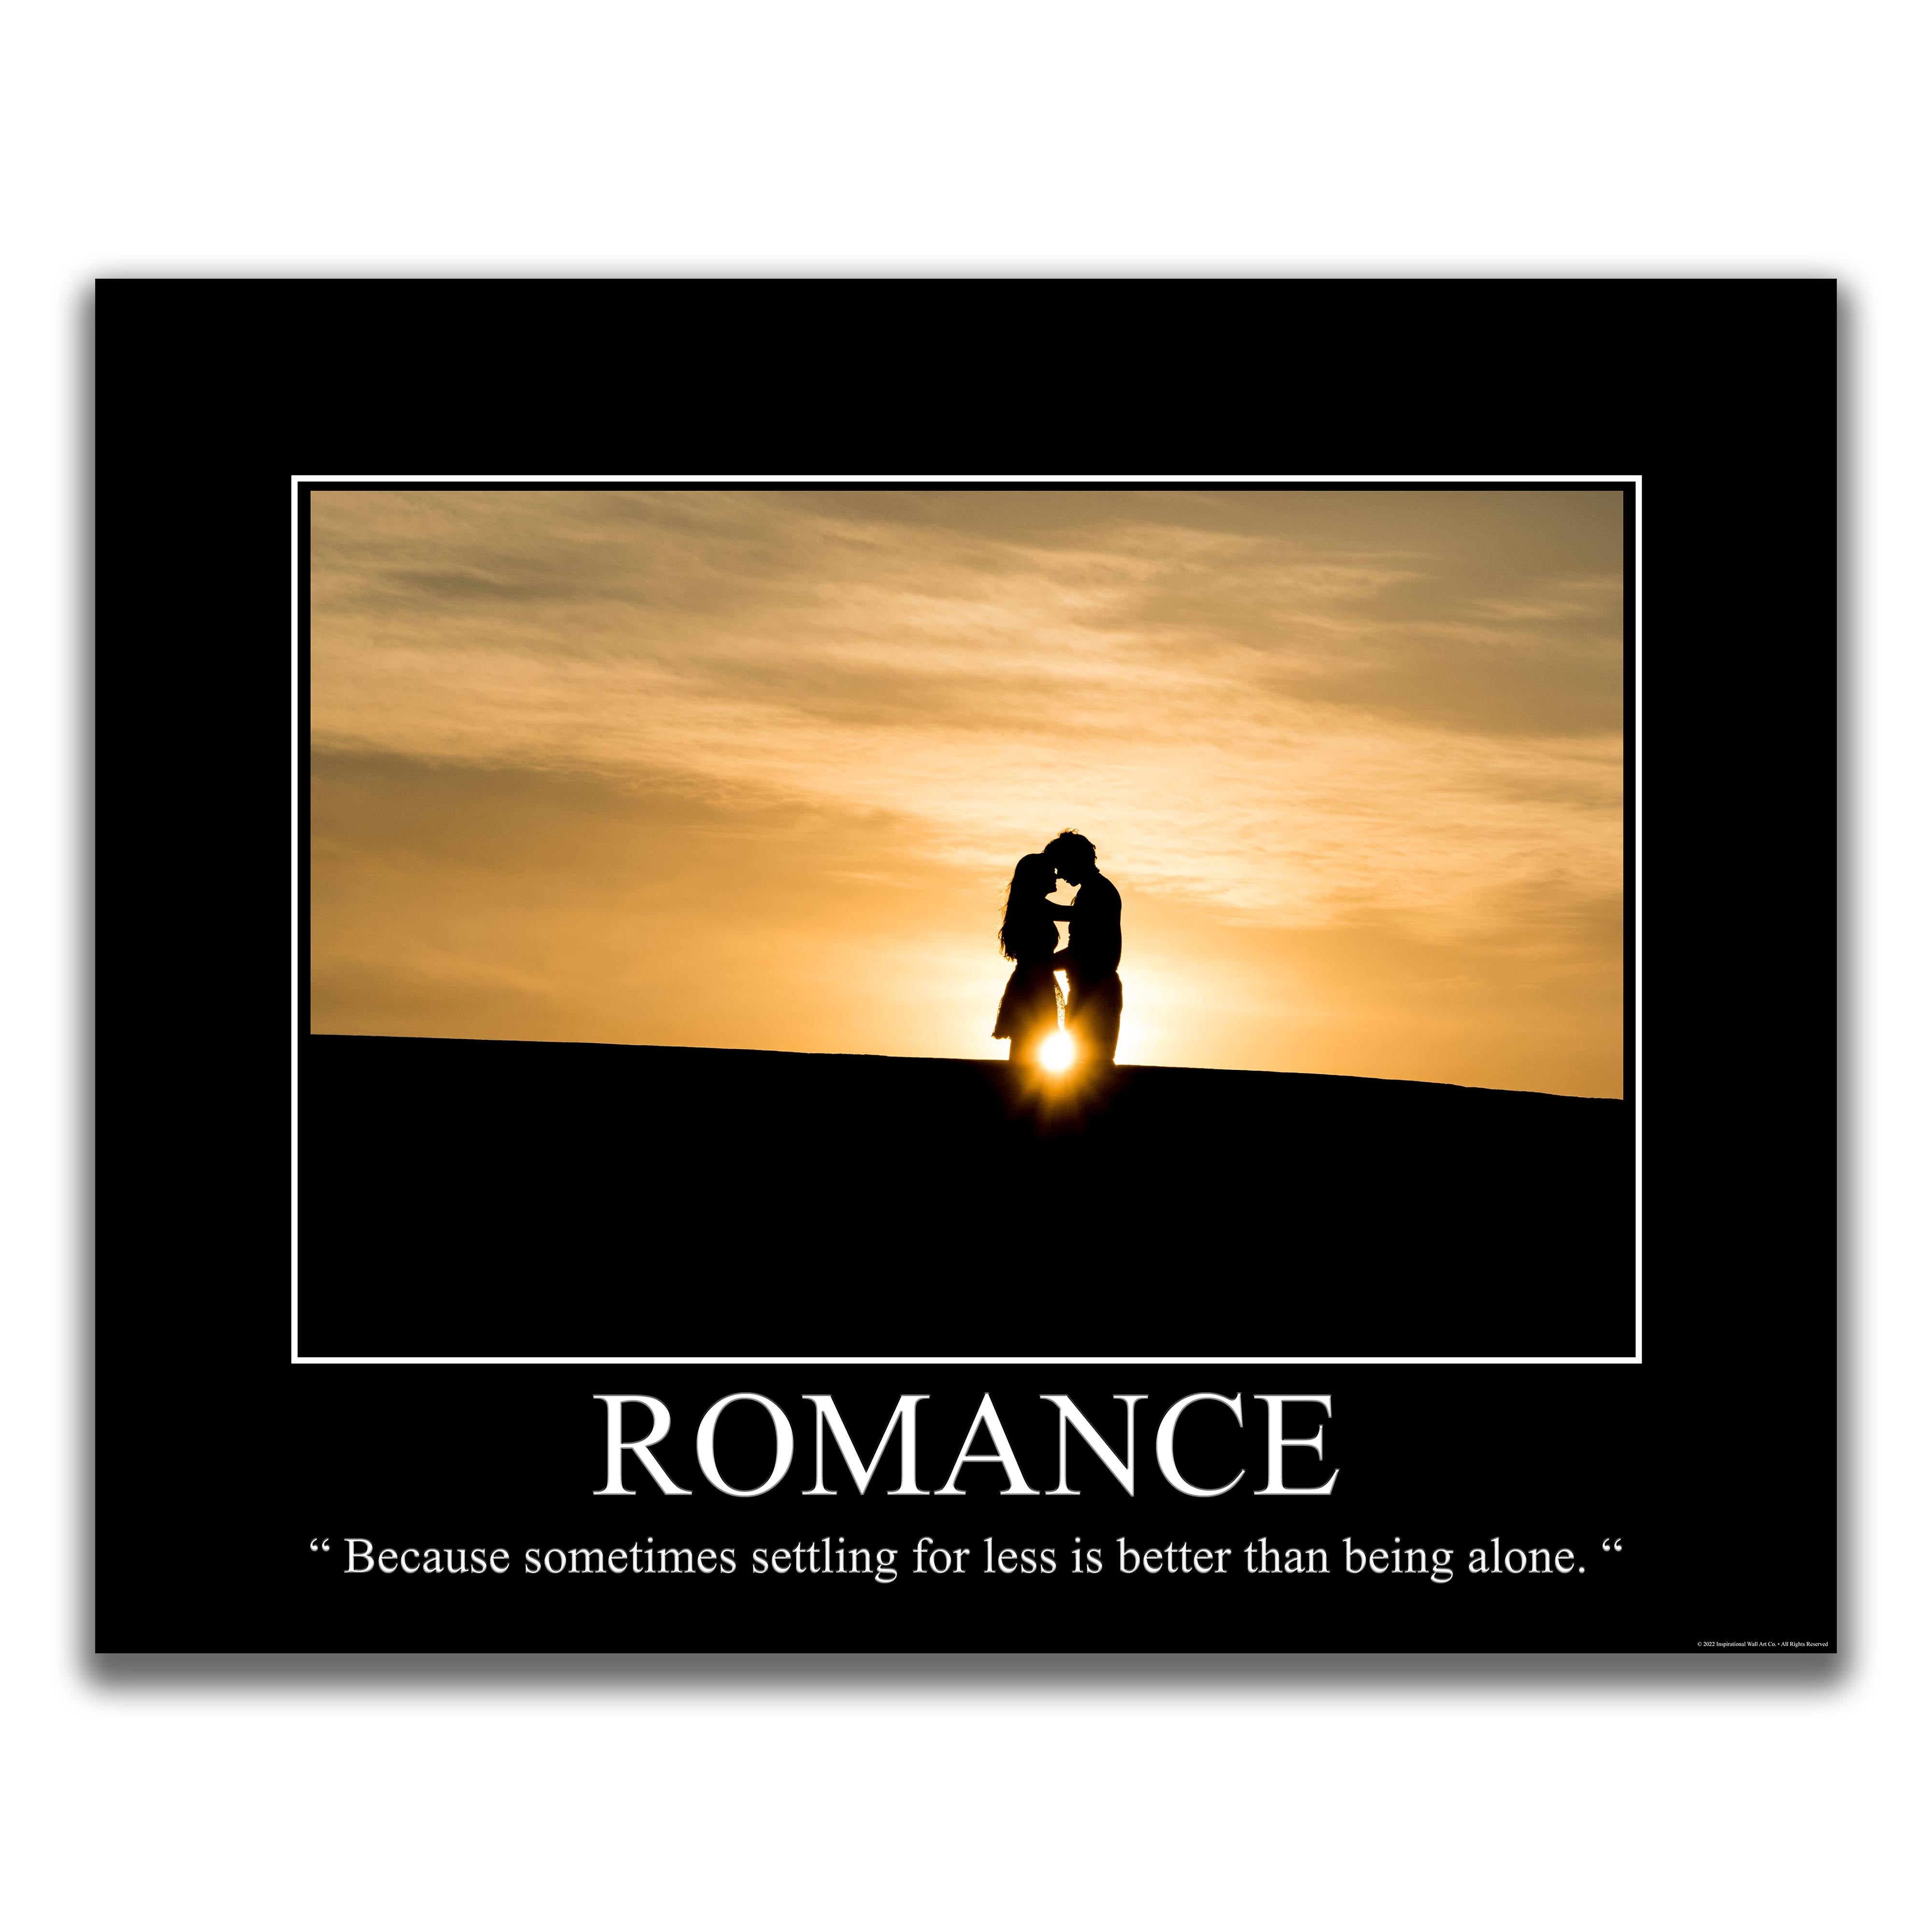 Romance - Demotivational Poster